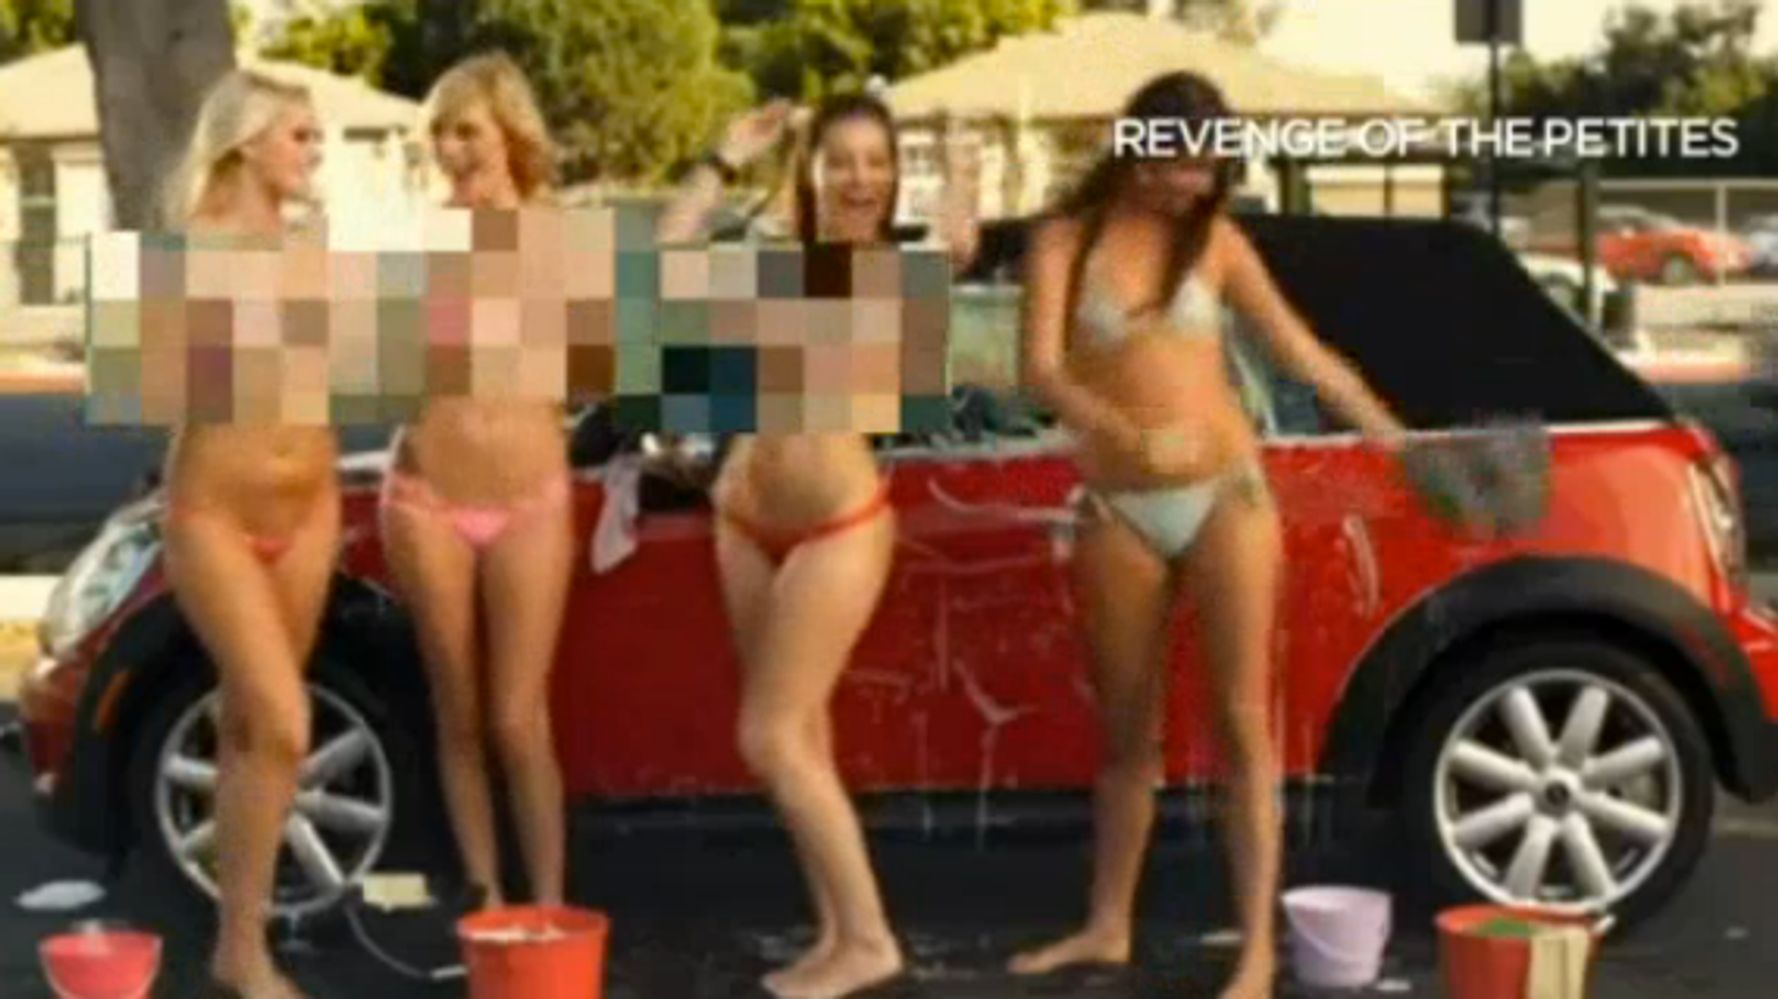 High School Nudes Porn - Porn Shoot Accidentally Allowed At LA High School | HuffPost Weird News